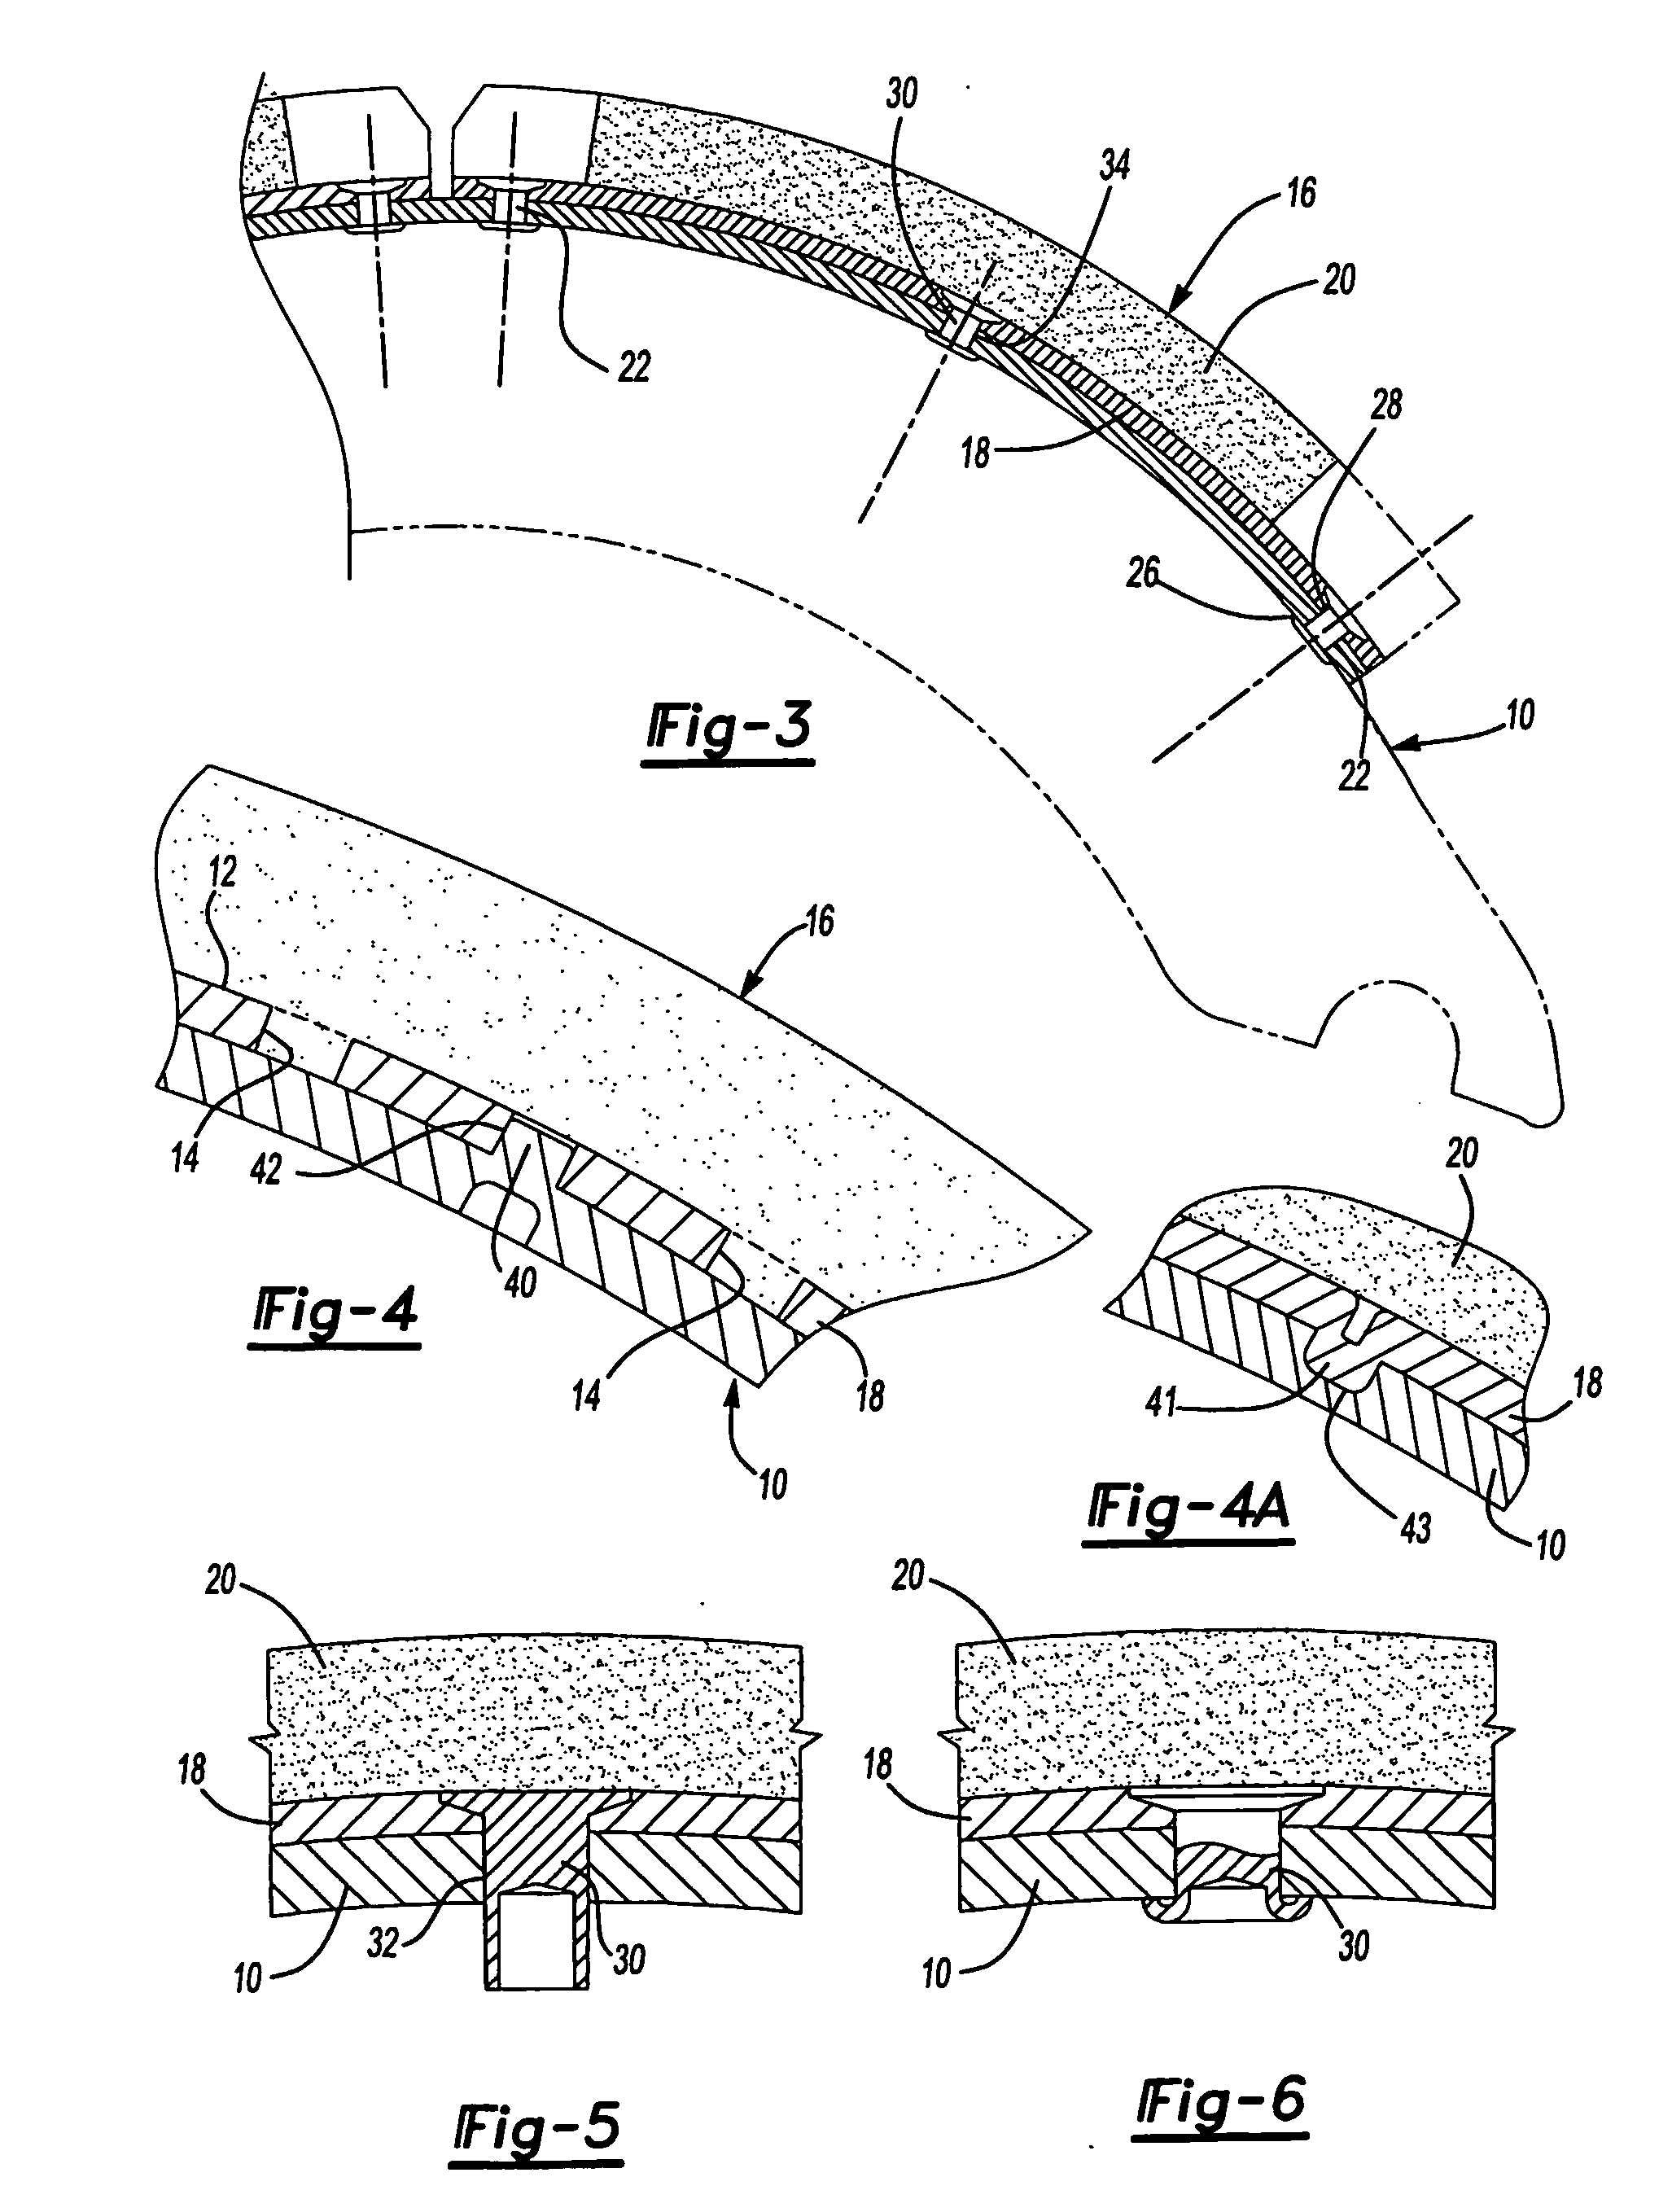 Brake shoe and brake lining blocks with keyed connection